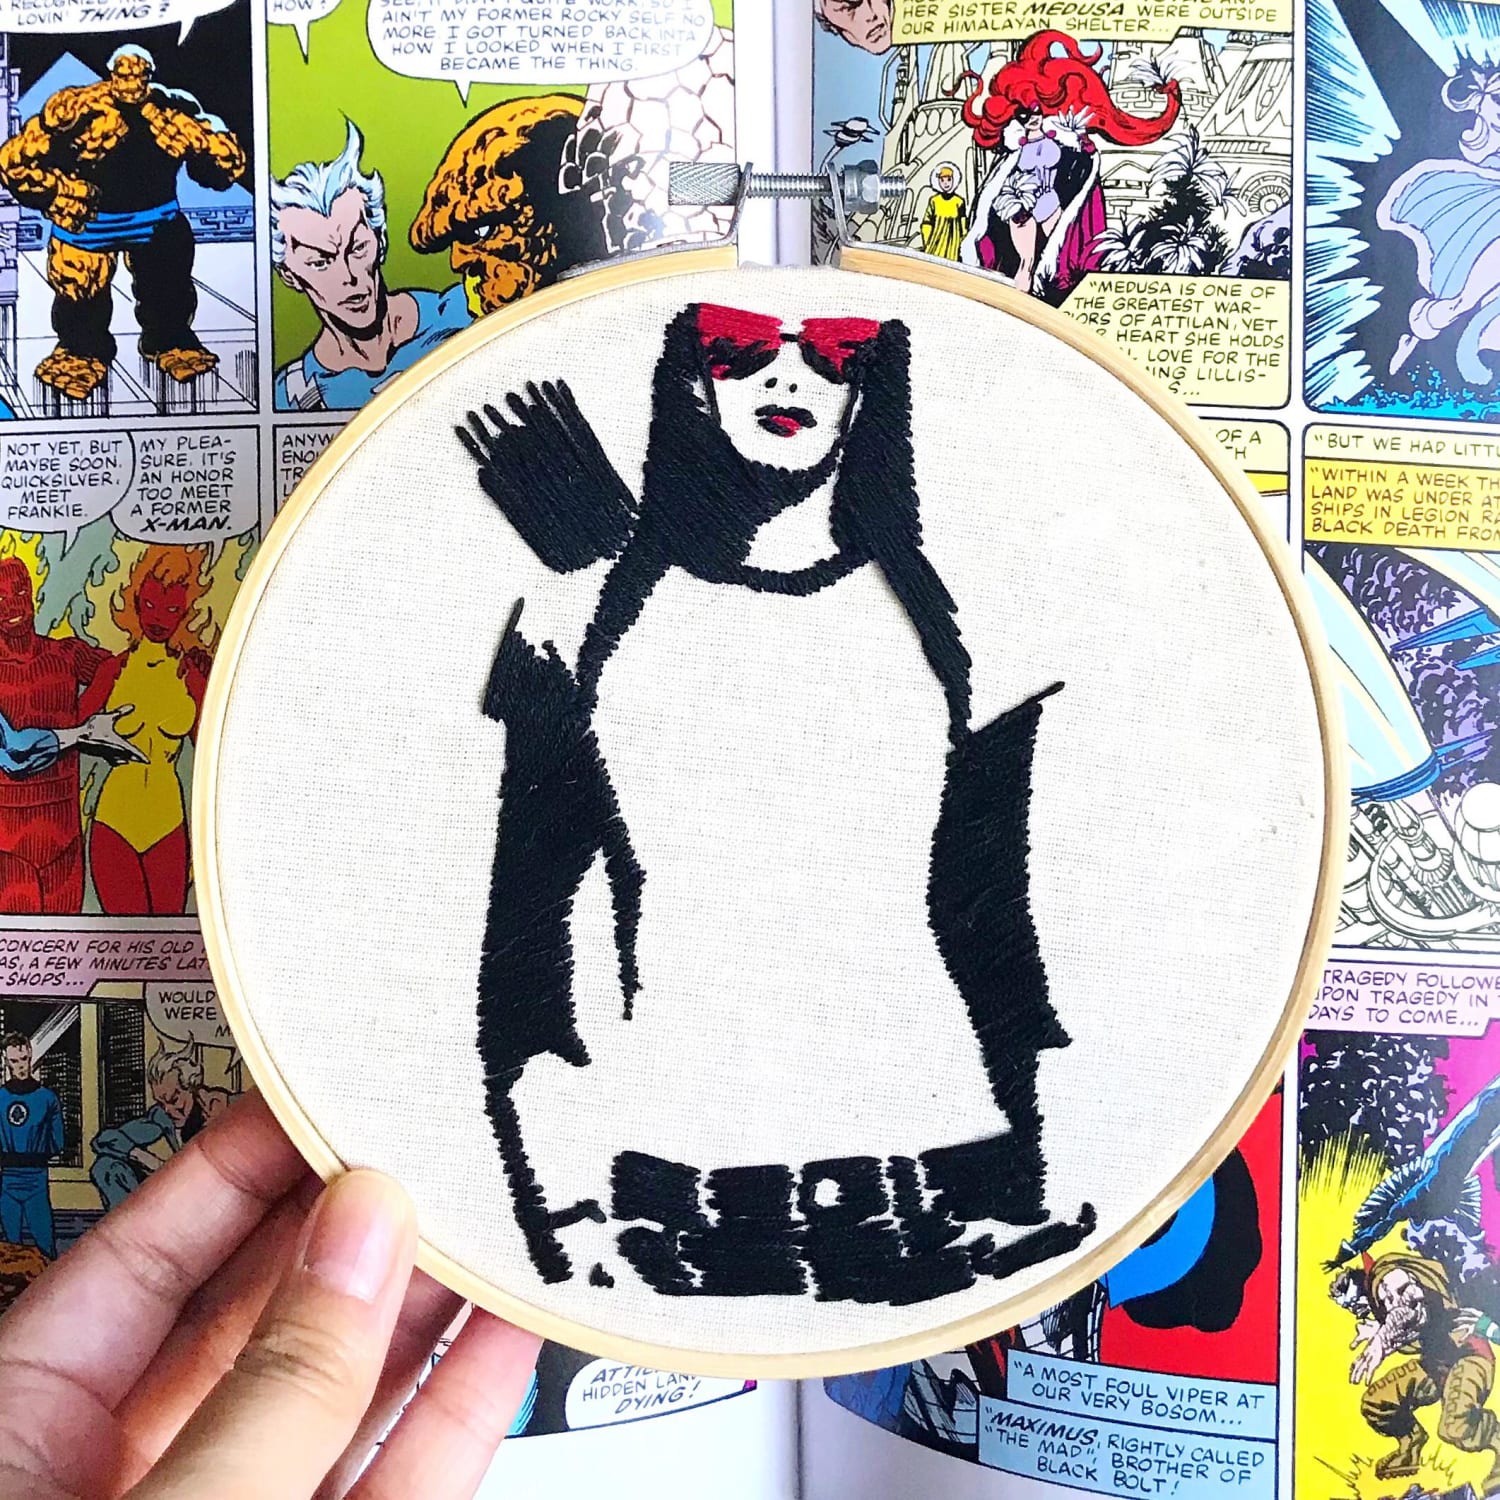 Kate Bishop “Hawkeye” embroidery